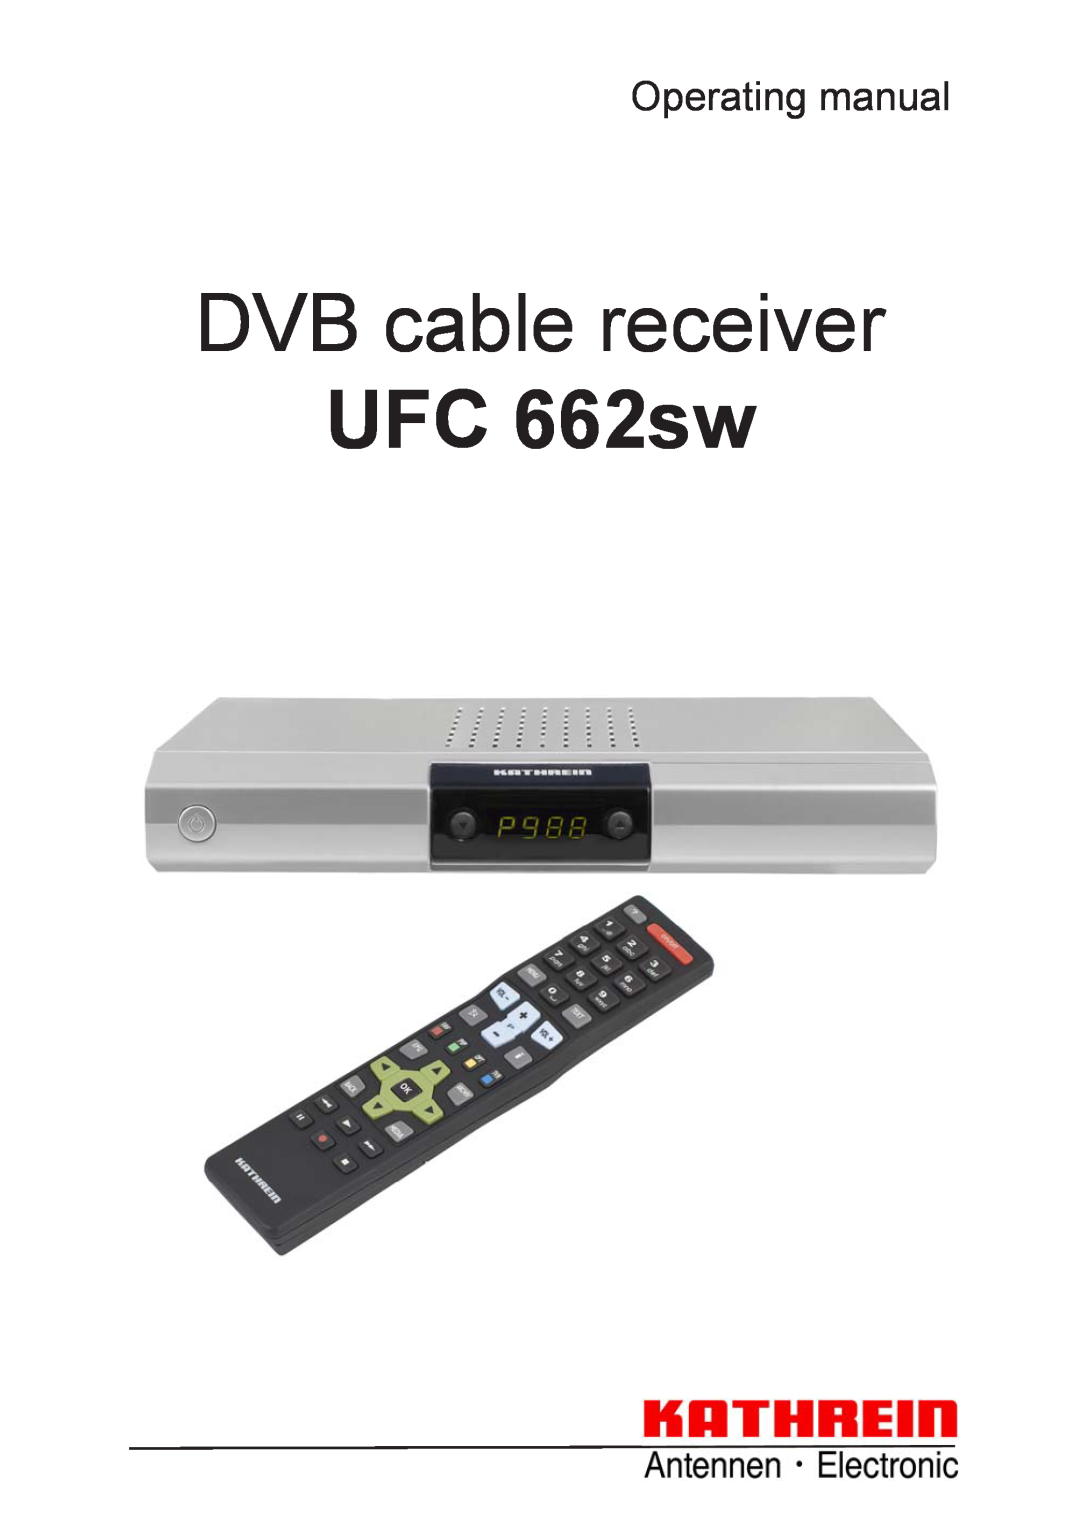 Kathrein UFC 662sw manual DVB cable receiver, Operating manual 